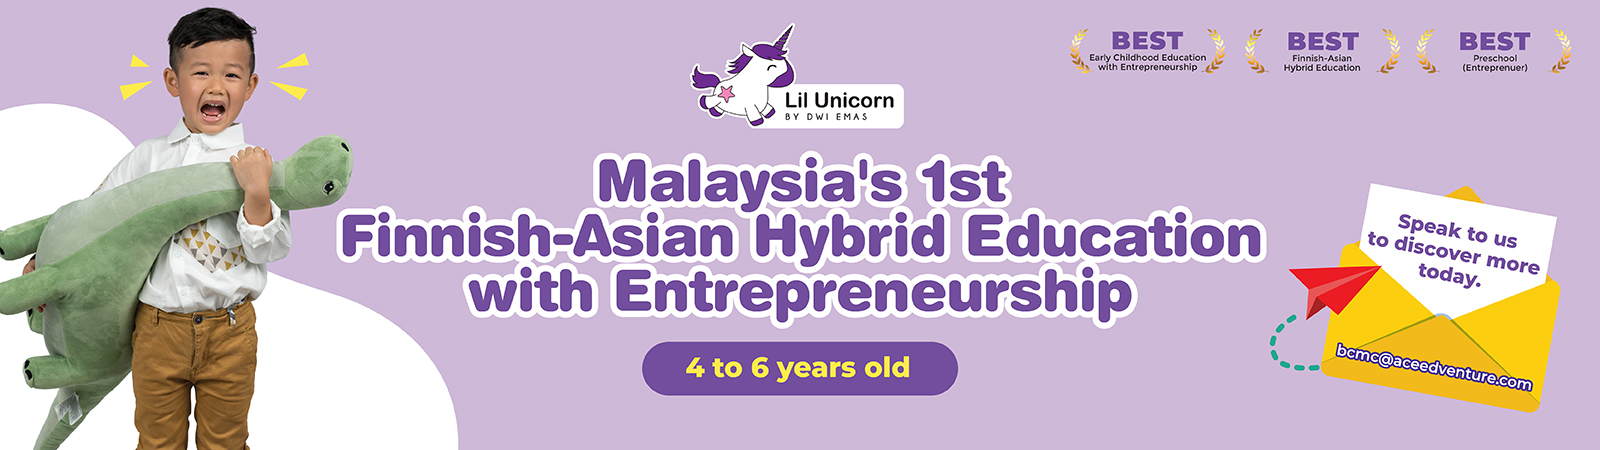 Pendidikan Hibrid Finland-Asia di Lil Unicorn